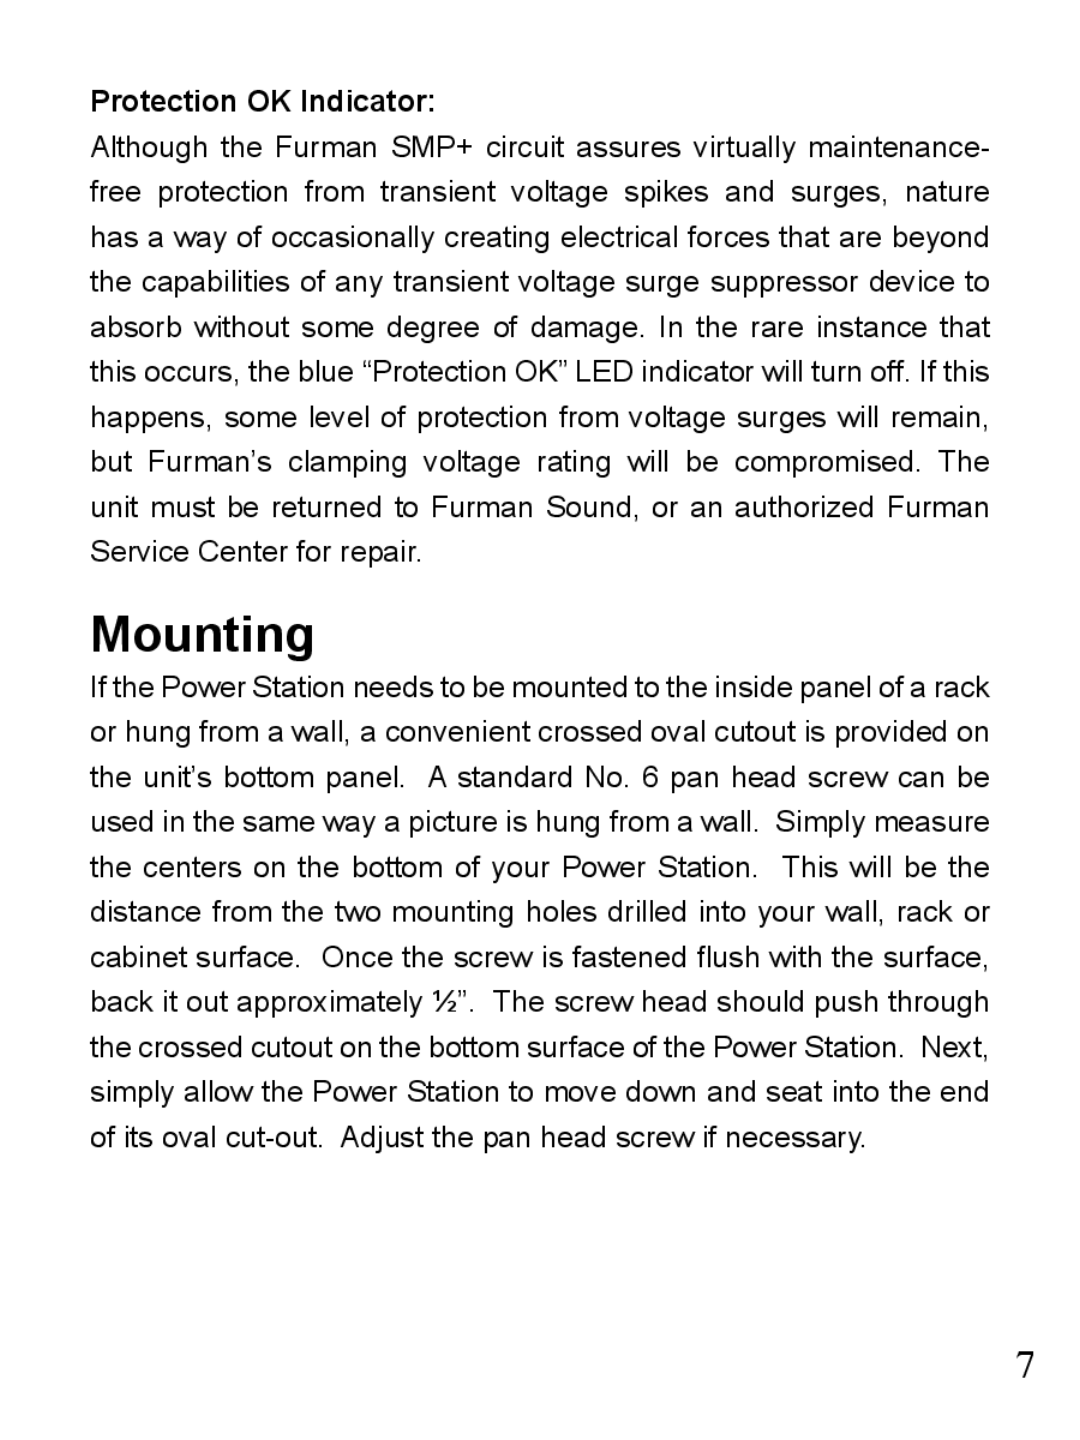 Furman Sound PST-8 owner manual Mounting, Protection OK Indicator 